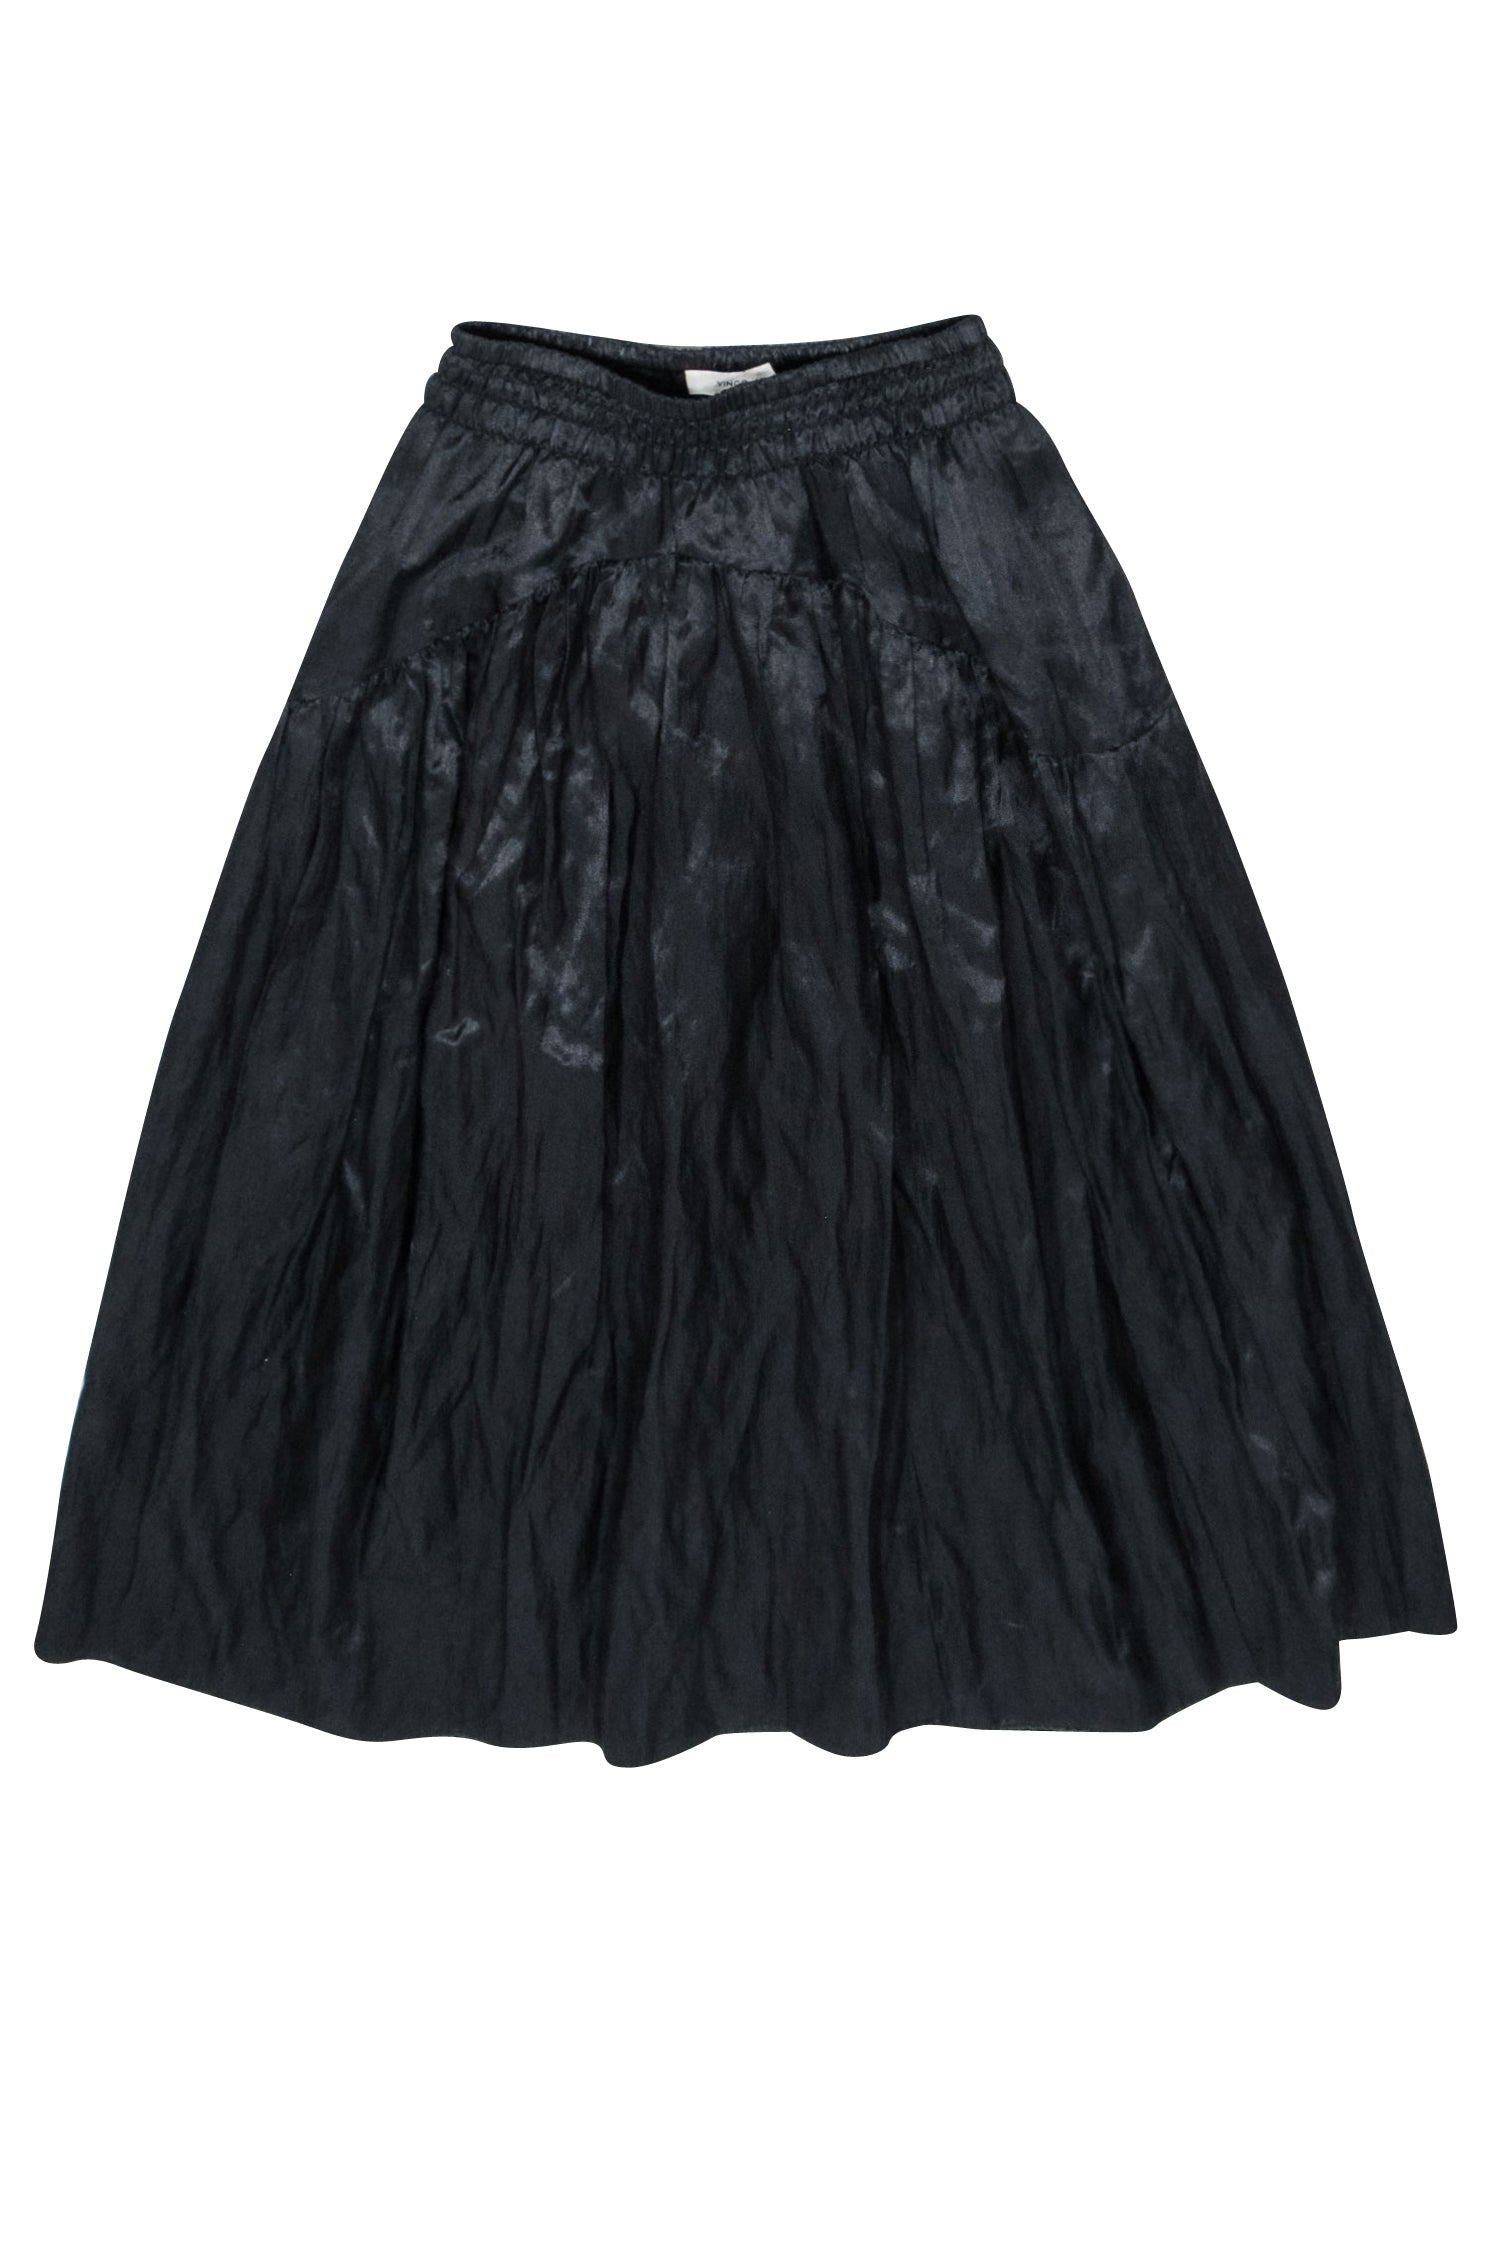 Vince - Black Satin Elastic Waist Skirt Sz 0